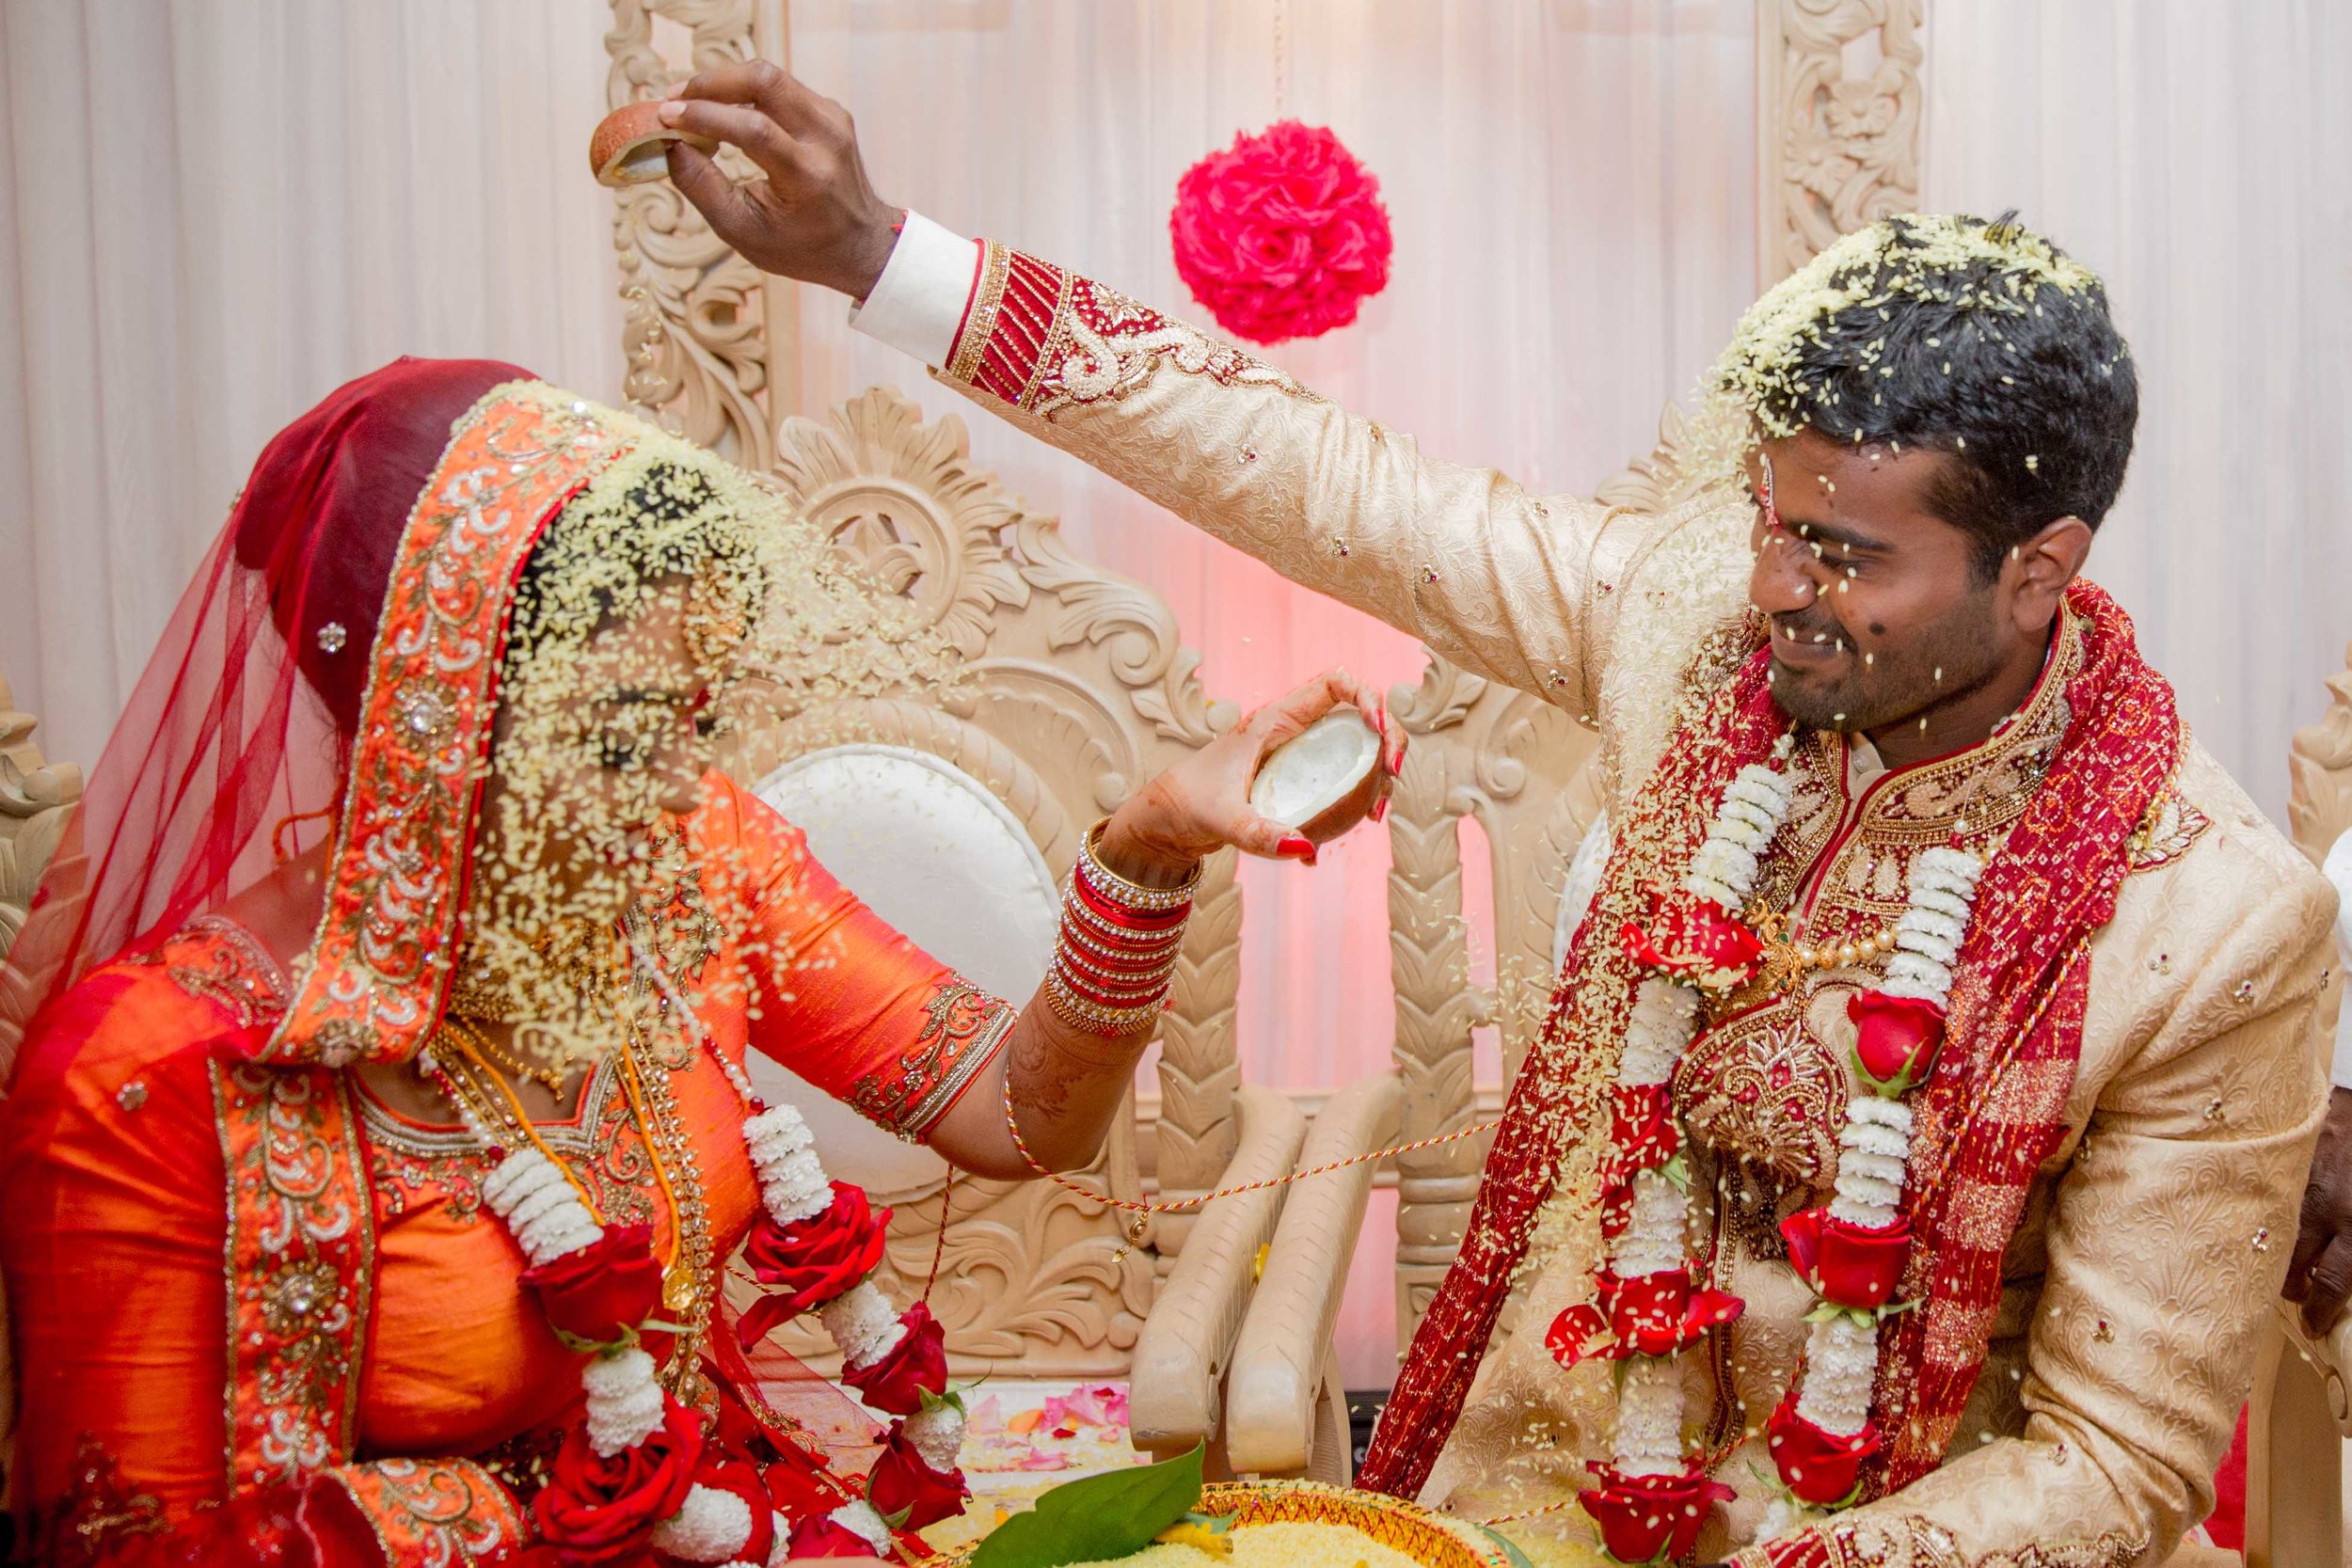 premier-banquetting-london-Hindu-asian-wedding-photographer-natalia-smith-photography-37.jpg